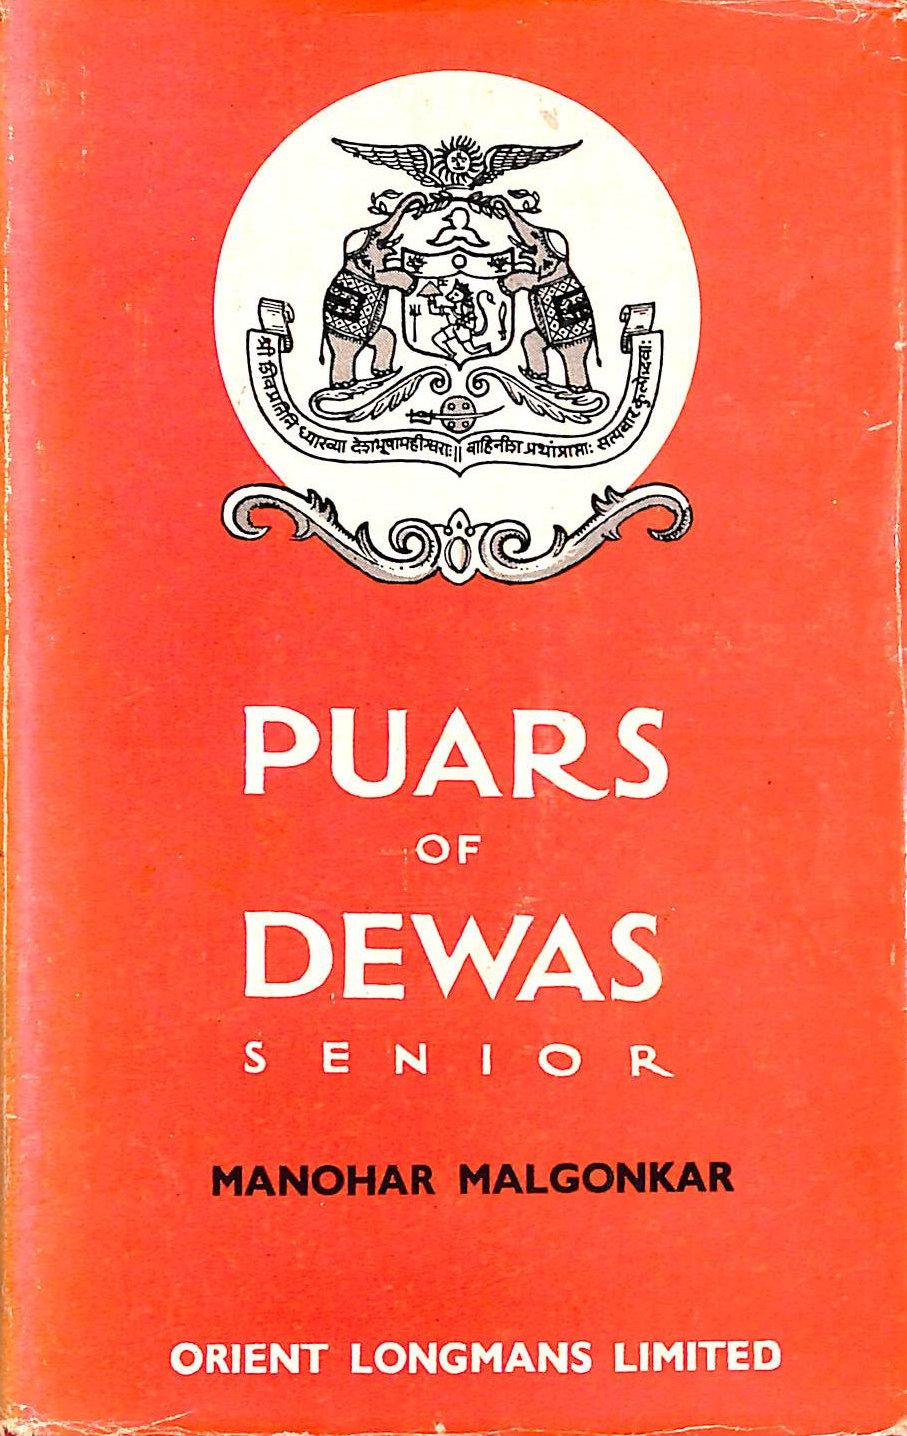 MANOHAR MALGONKAR. - The Puars of Dewas Senior.